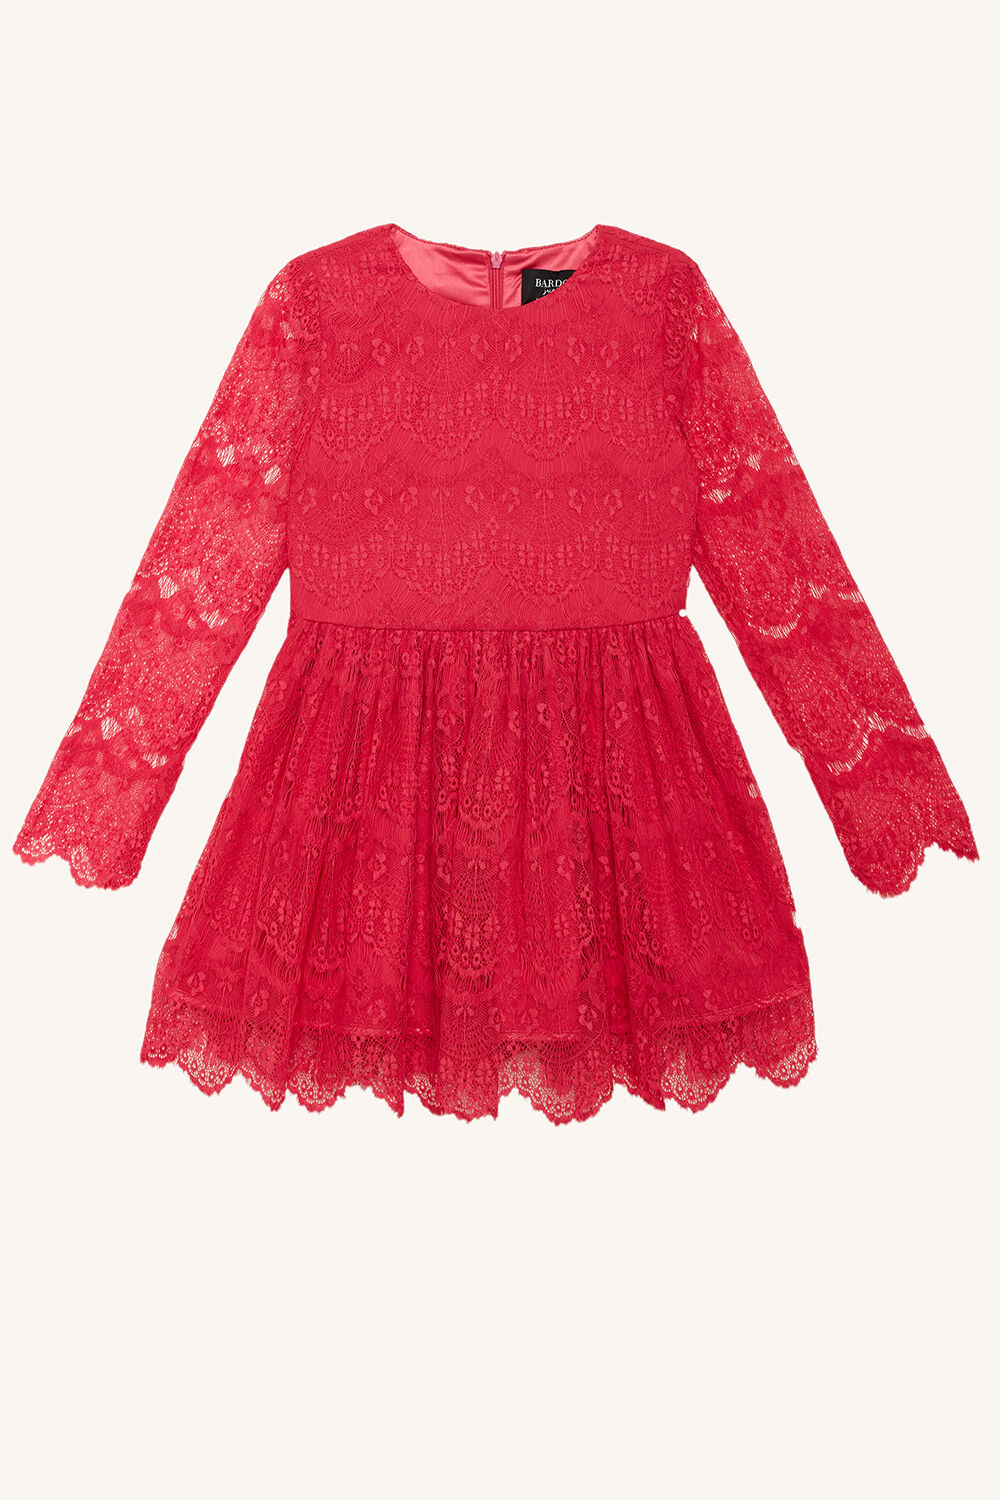 Tween Girl Gertrude Lace Dress in Pink